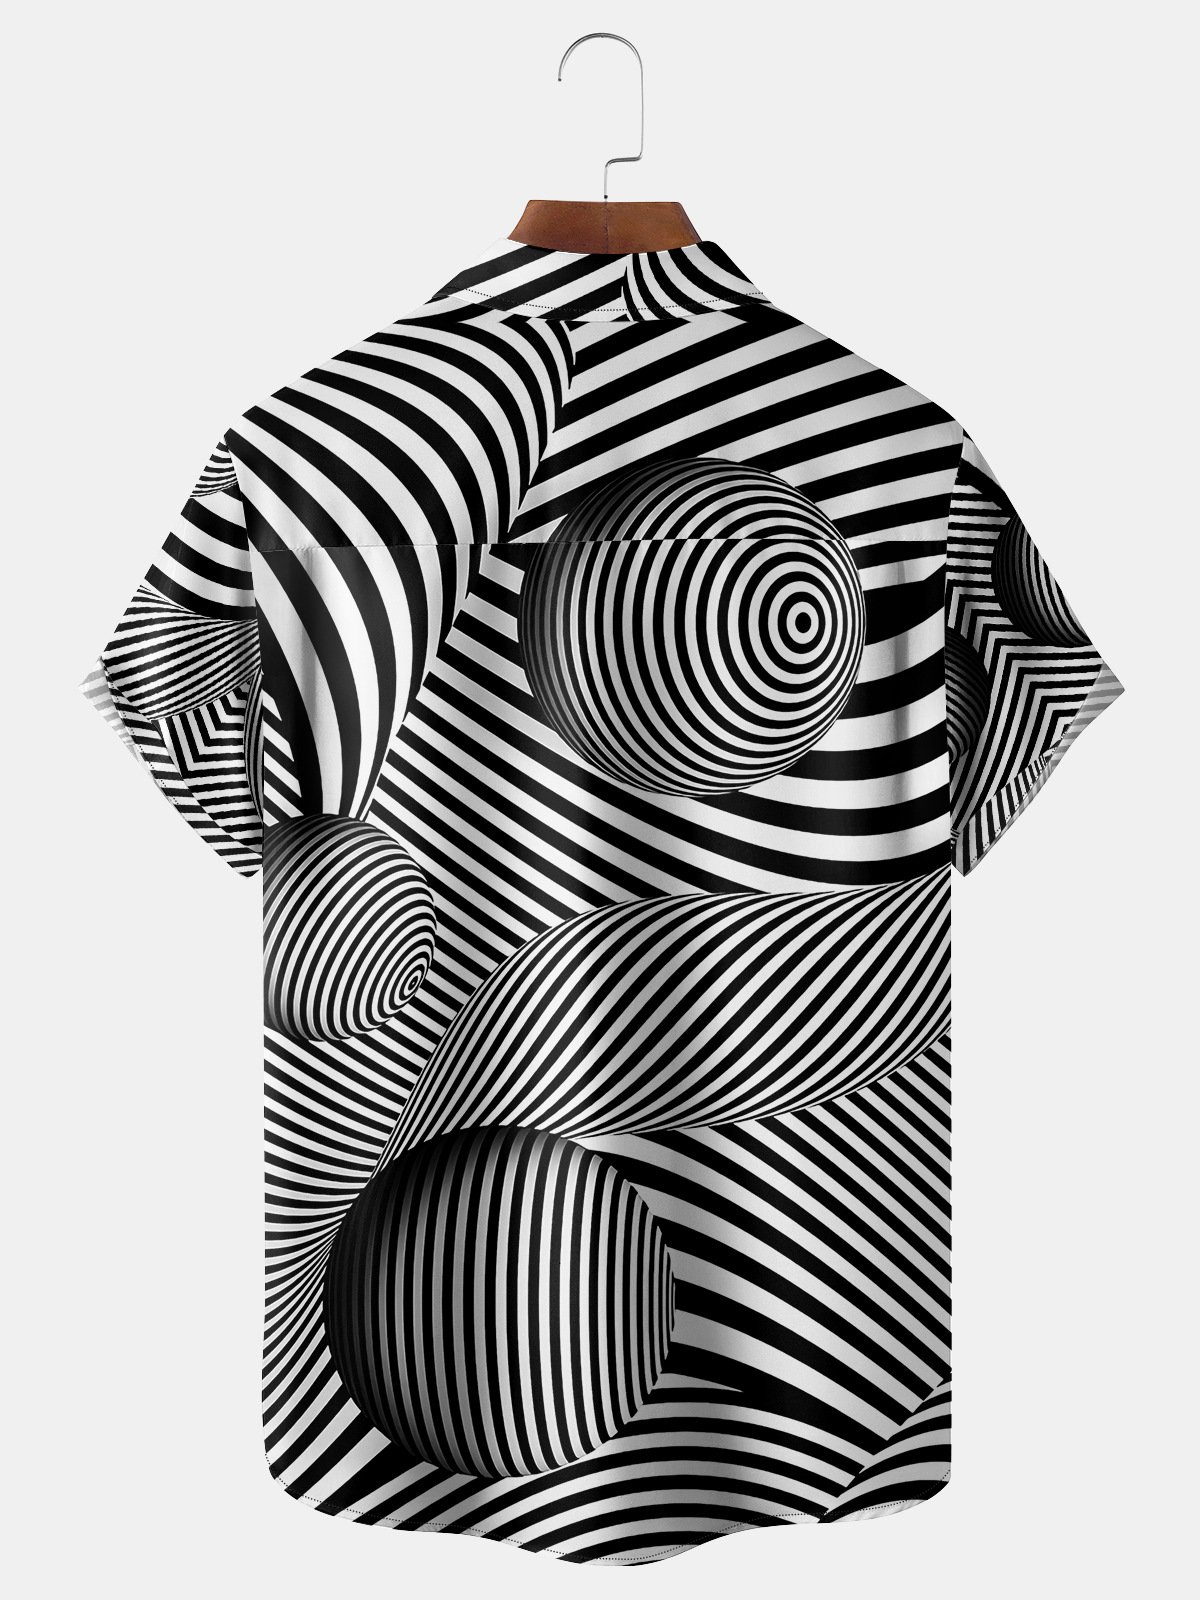 3D Geometry Chest Pocket Short Sleeve Casual Shirt